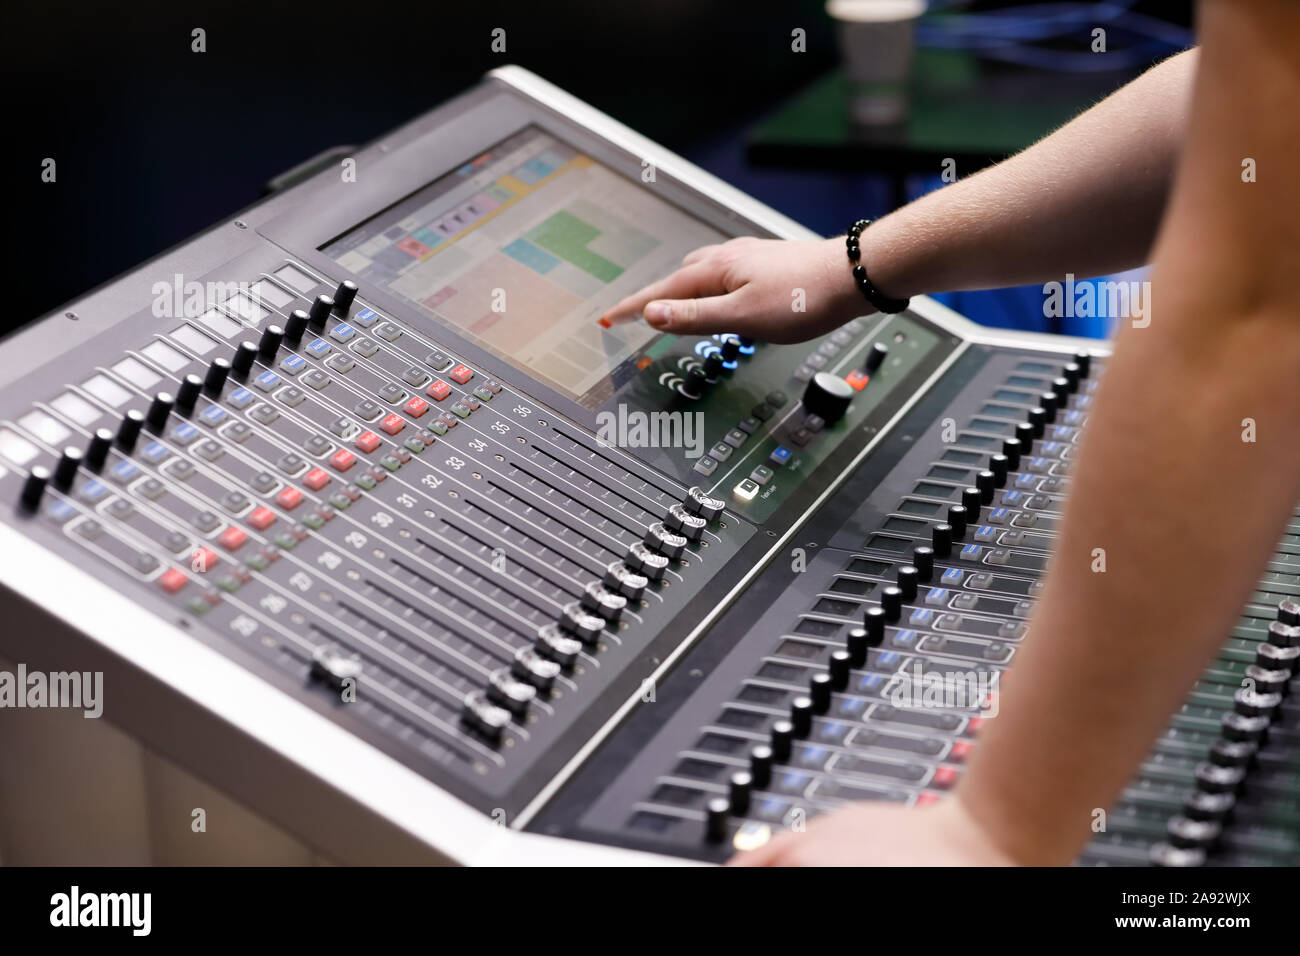 Betreiber arbeiten mit kompakten digitalen Broadcast Audio Console im Studio. Selektive konzentrieren. Stockfoto